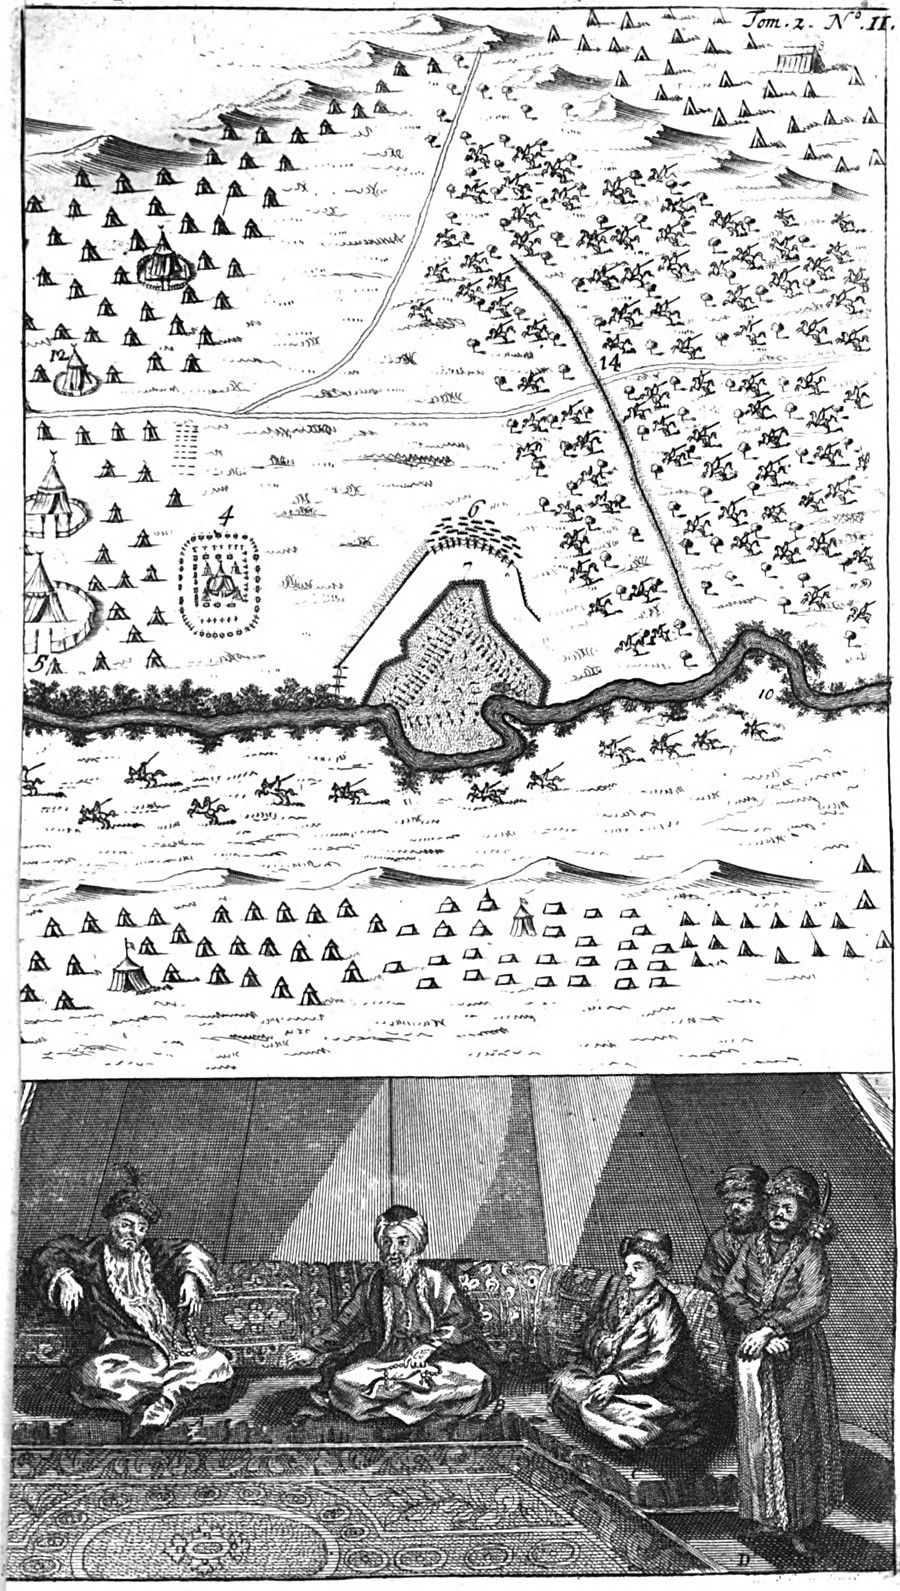 Bataille du Prout. Ilustrasi dari William Hogarth (1697 – 1764) untuk 'Travels' oleh Aubry de la Motraye, 1724.